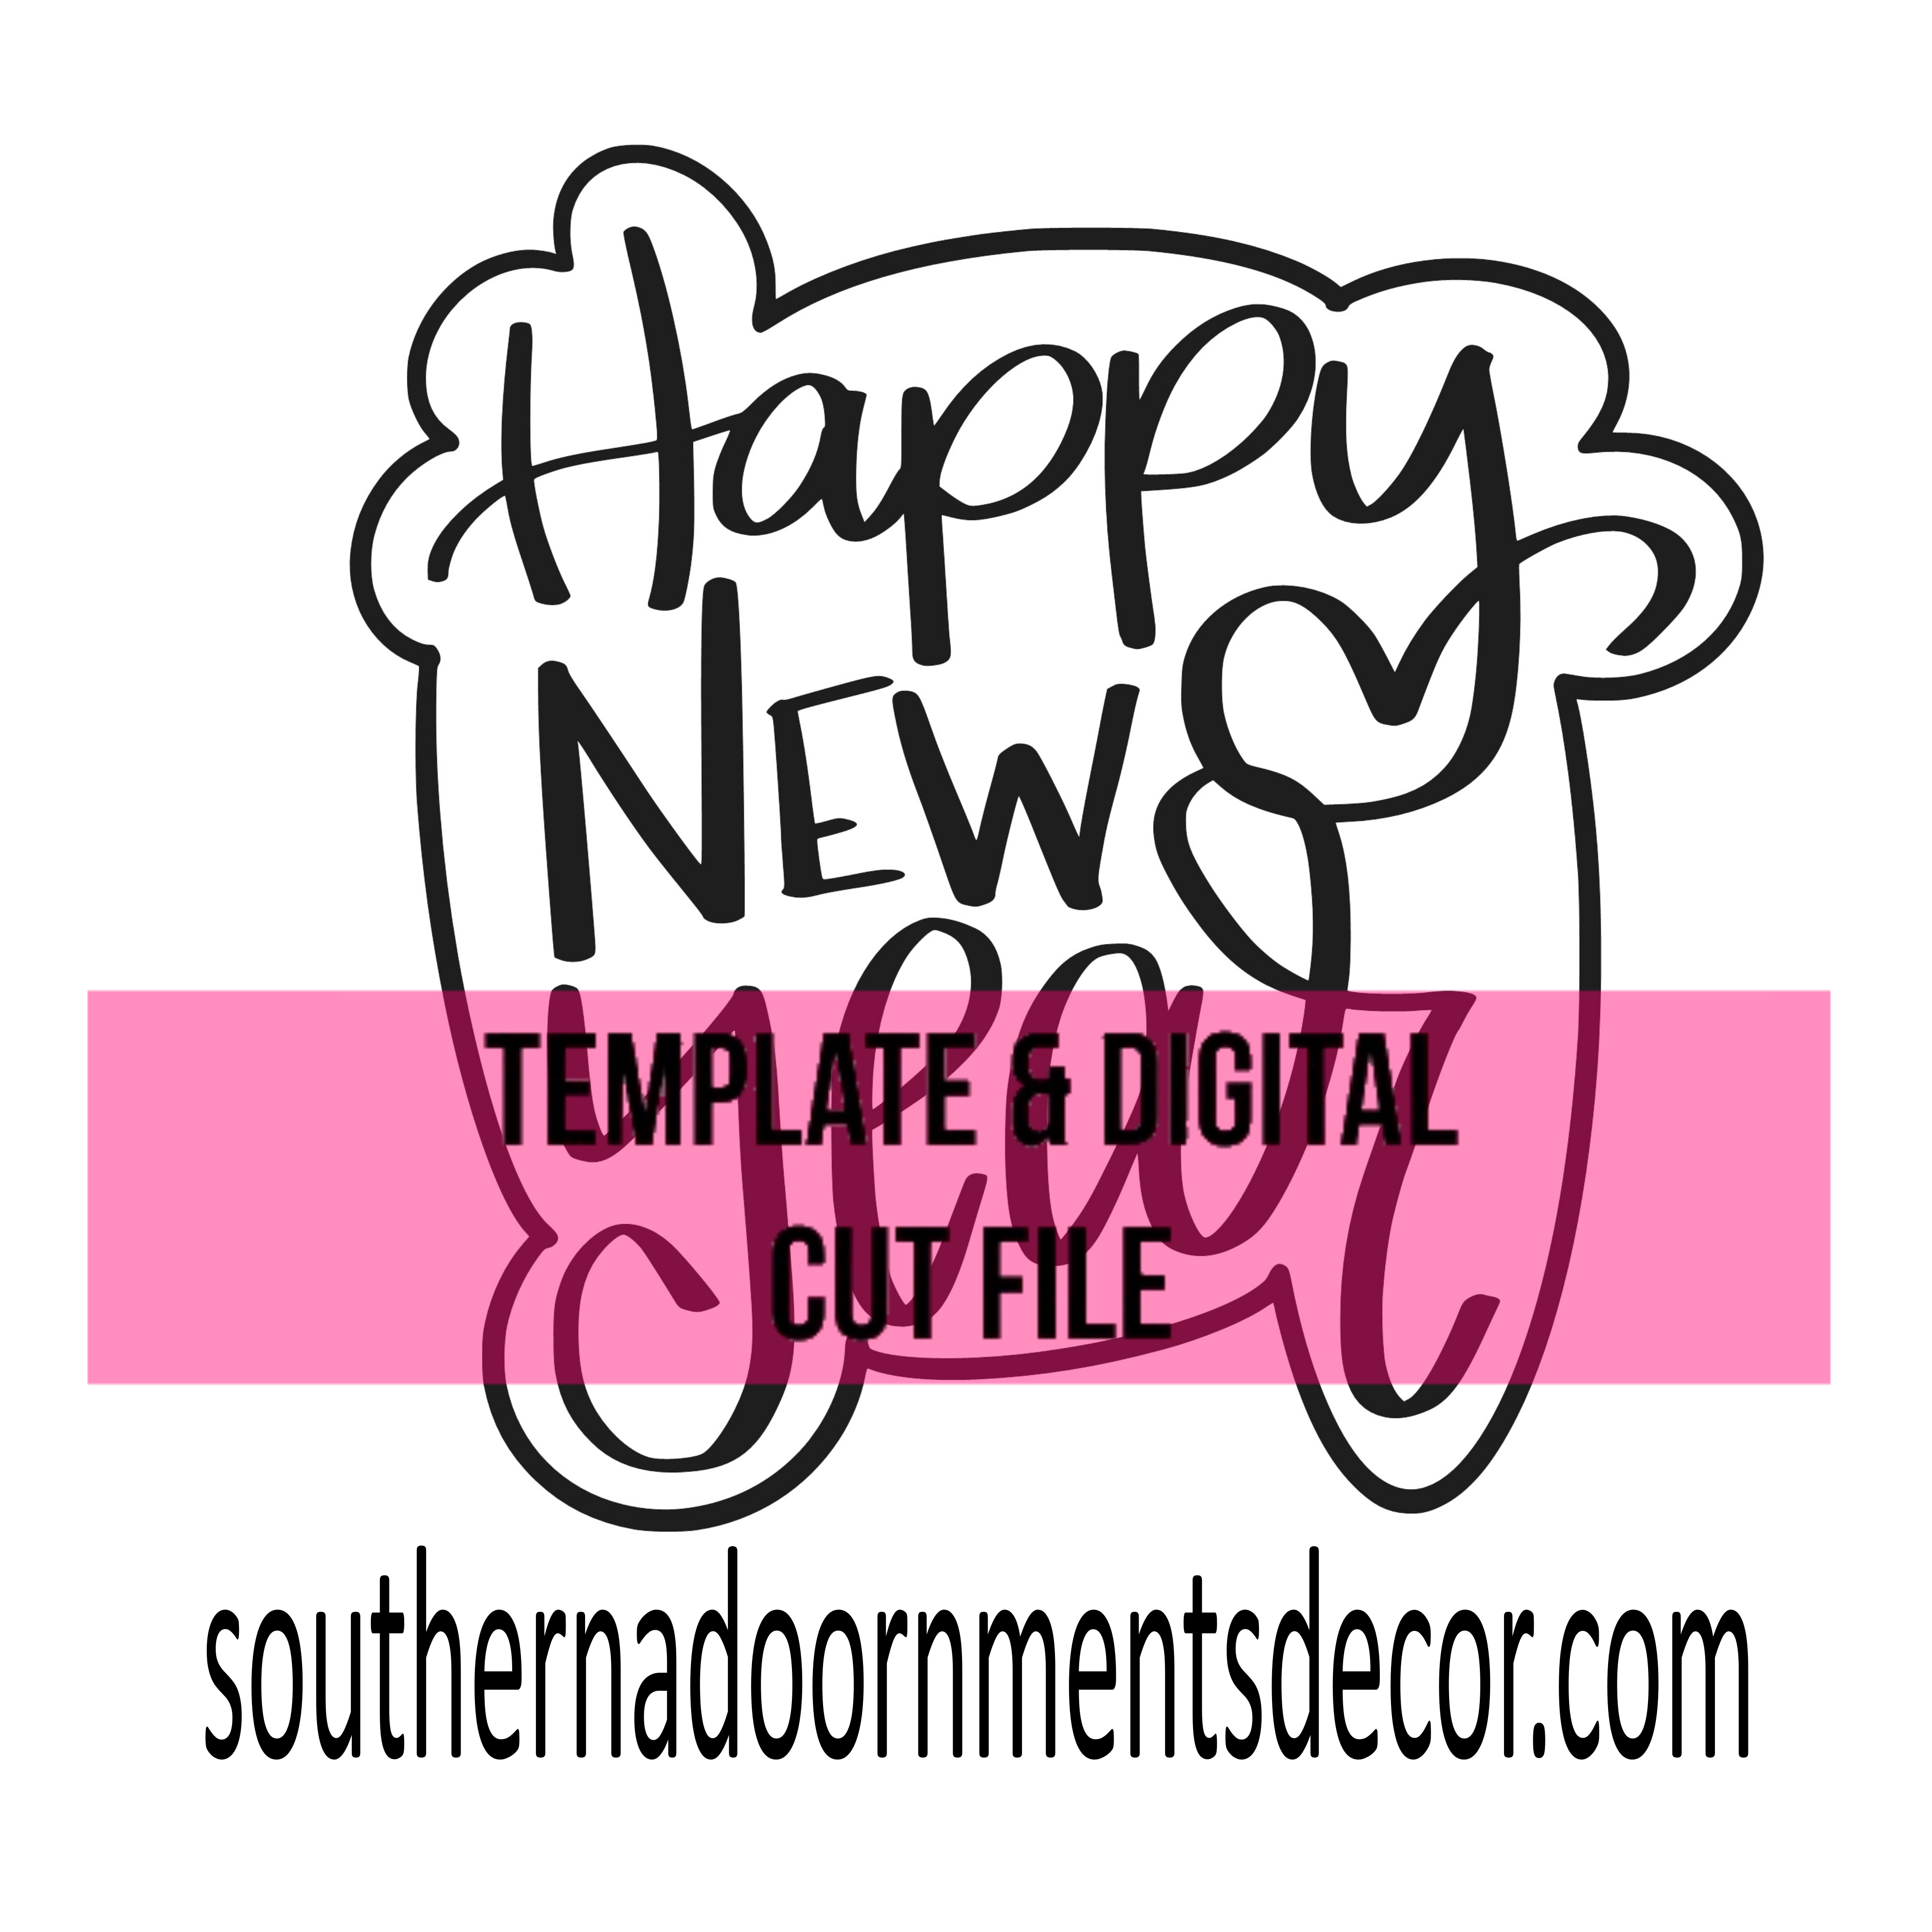 Happy New Year Template & Digital Cut File